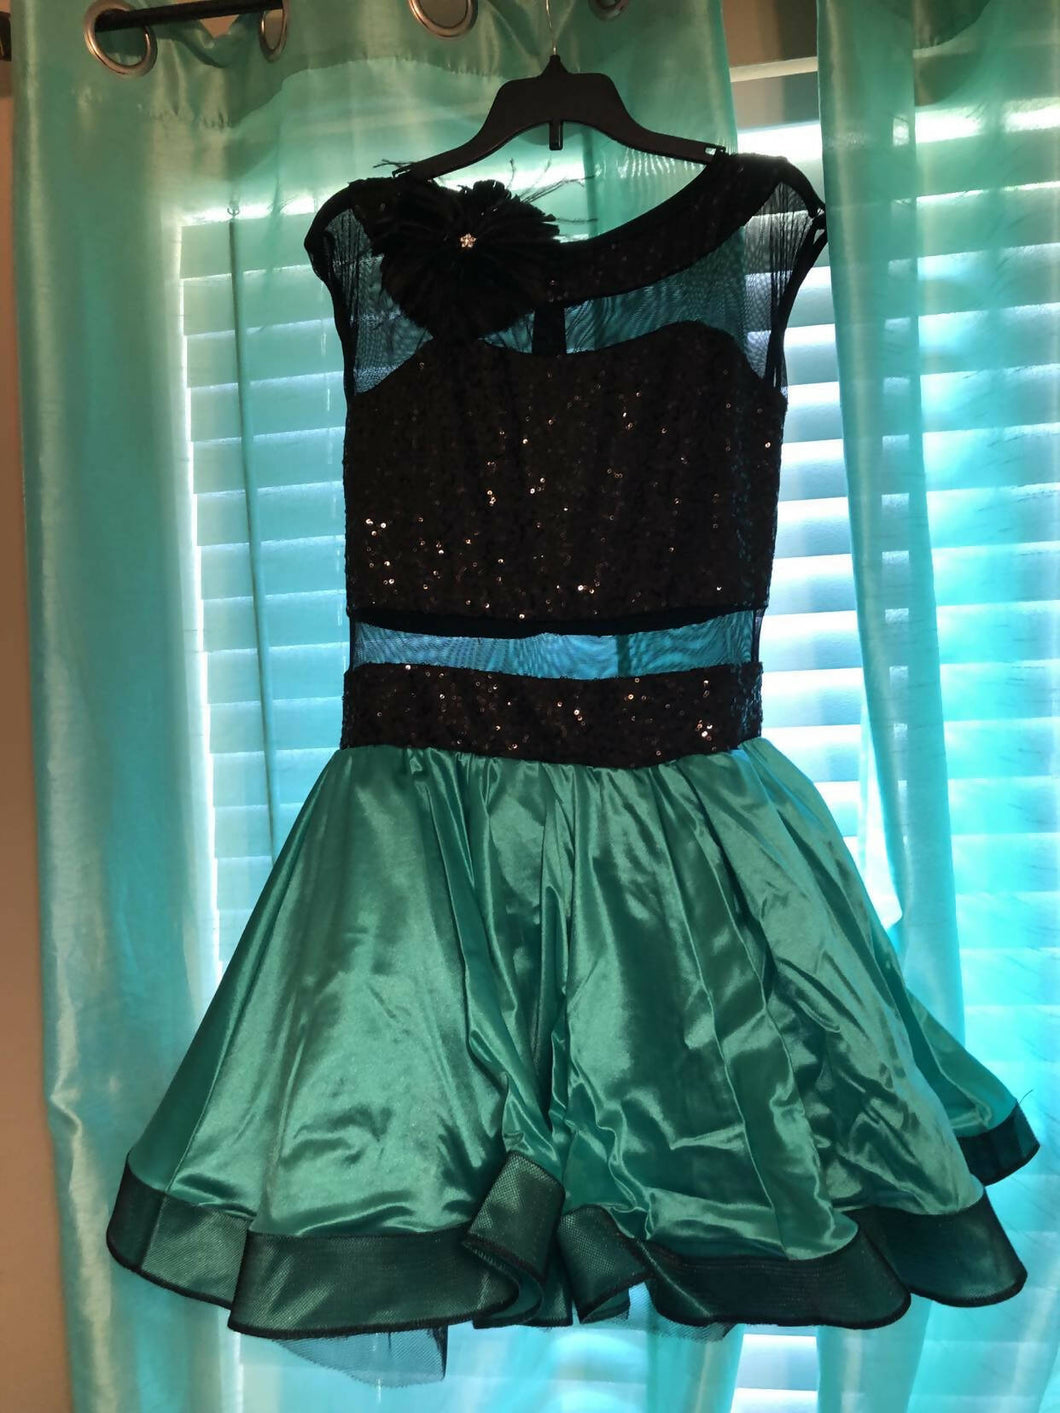 Weissman Green and Black Colored Dance Costume Dress